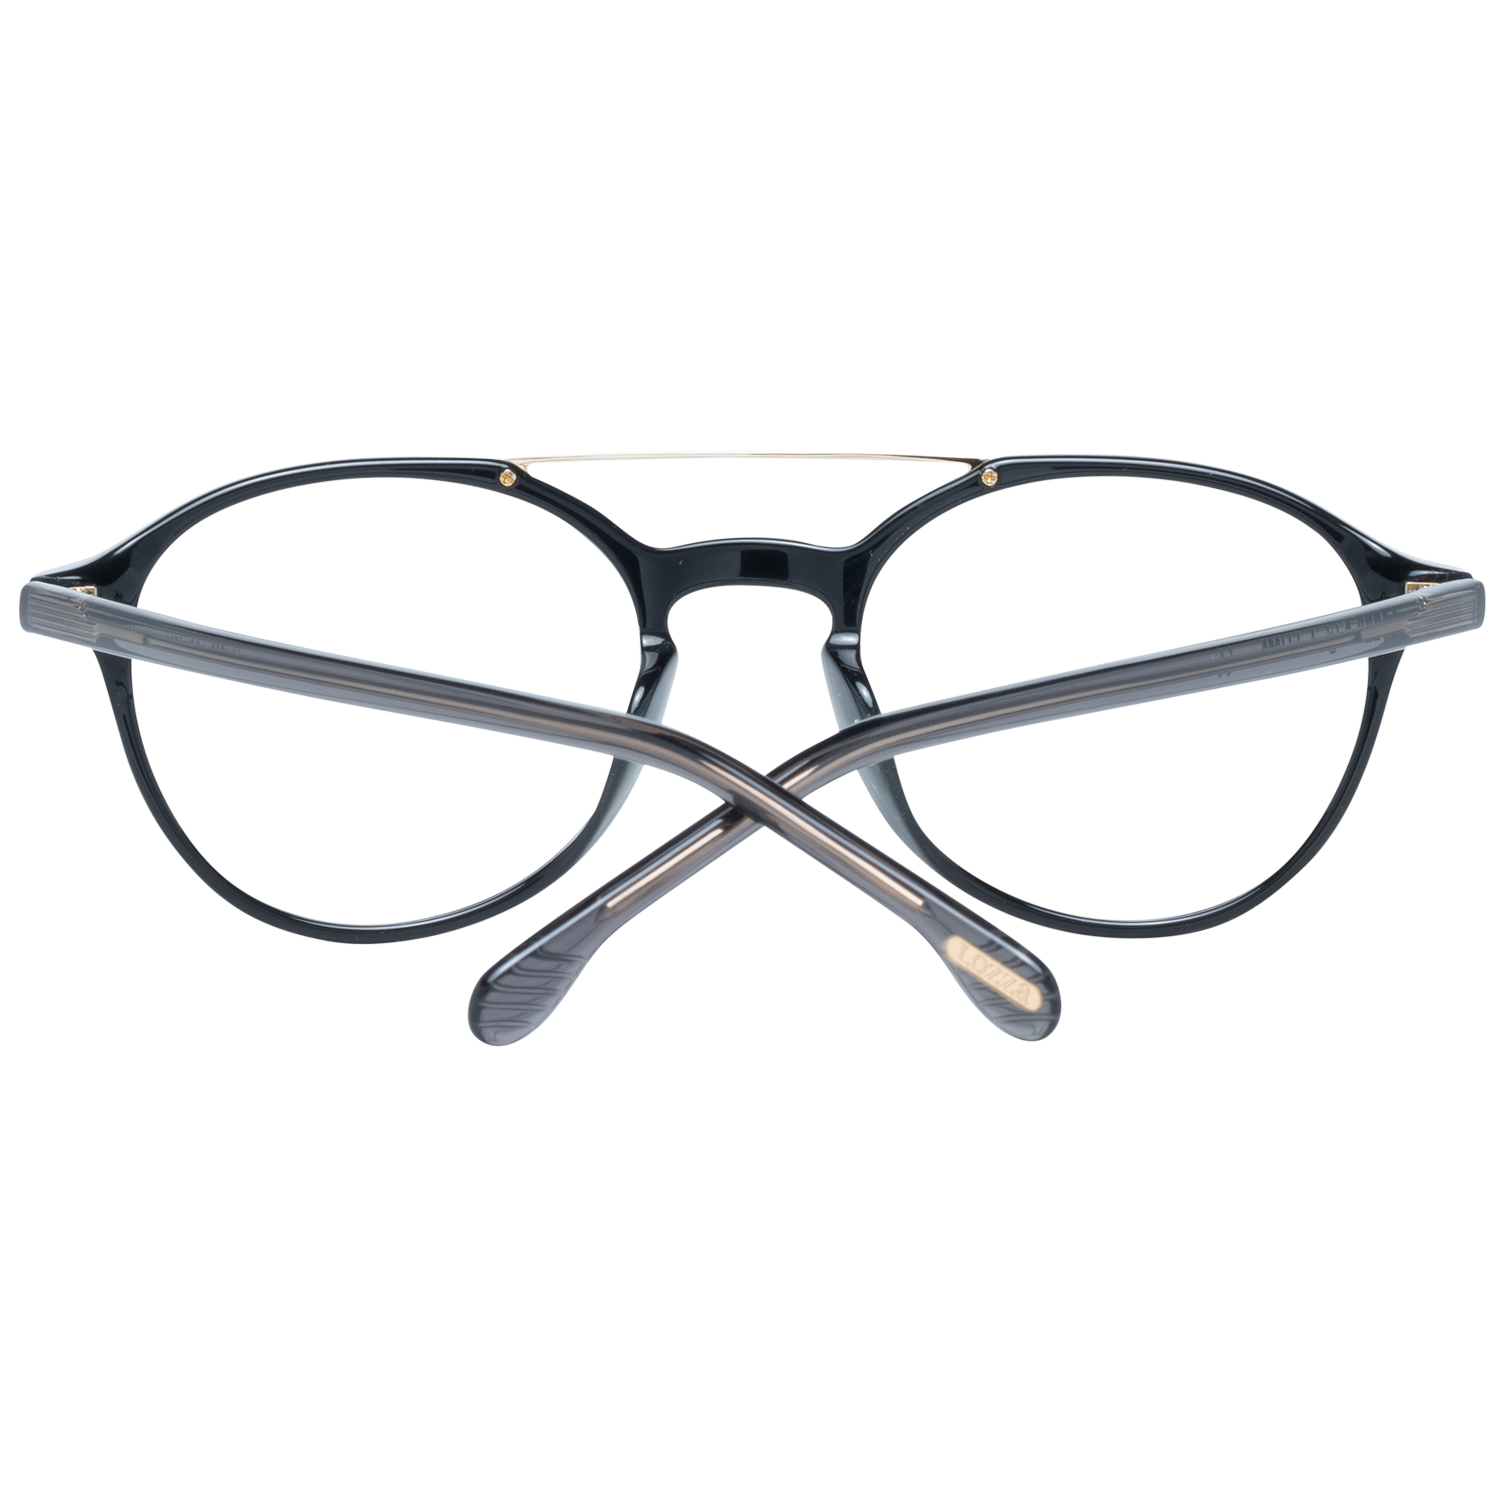 Lozza Frames Lozza Optical Frame VL4200 0700 51 Eyeglasses Eyewear UK USA Australia 